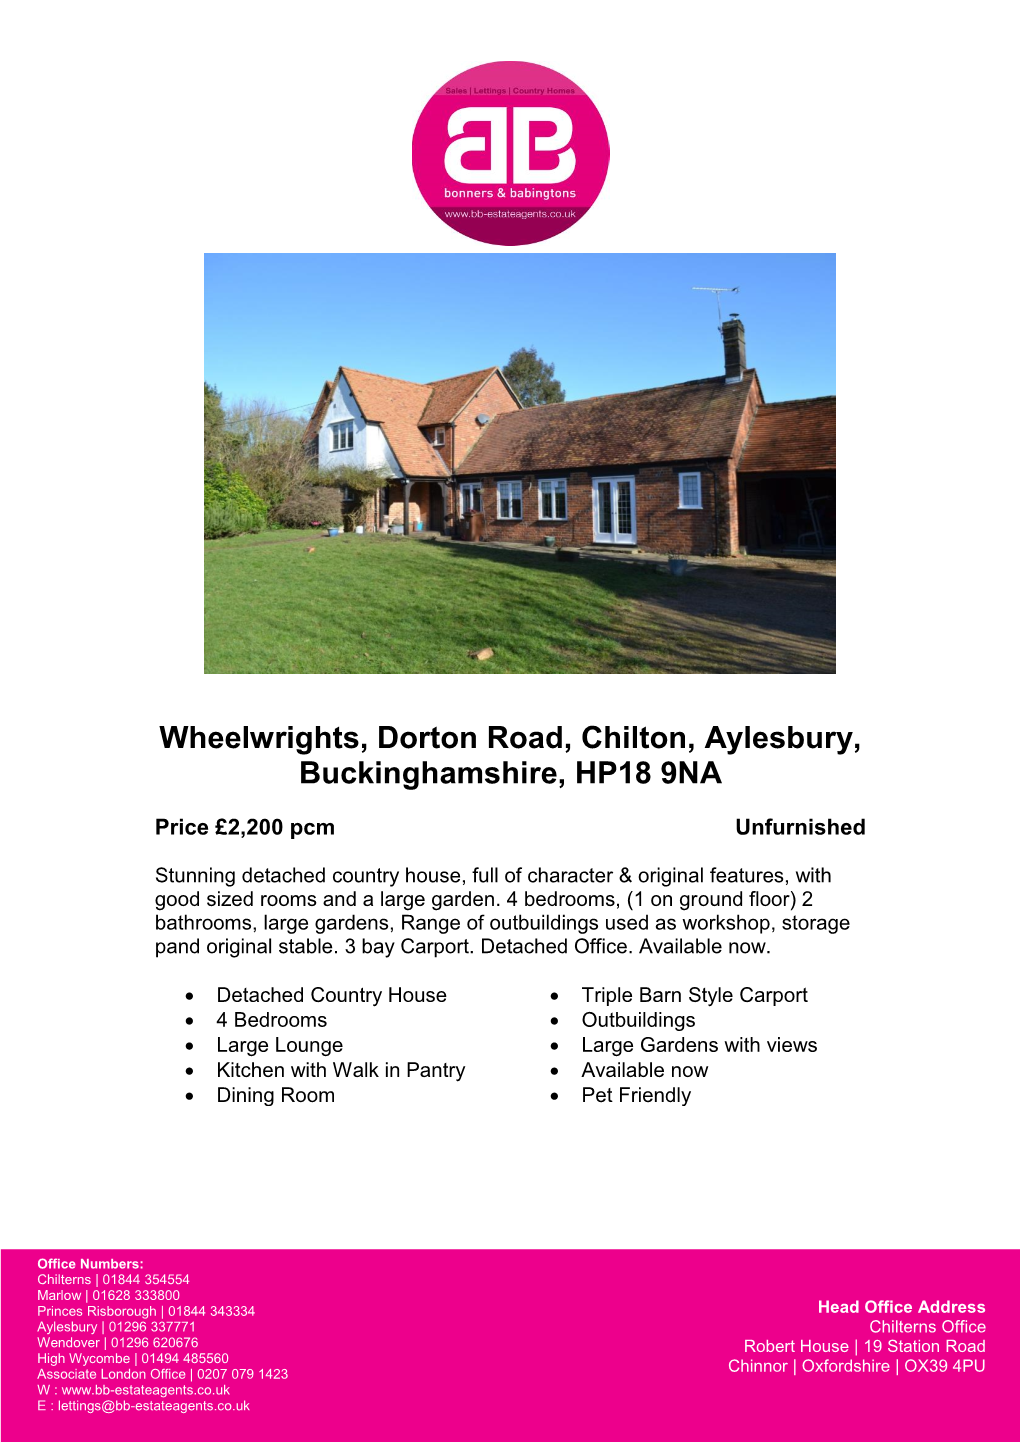 Wheelwrights, Dorton Road, Chilton, Aylesbury, Buckinghamshire, HP18 9NA